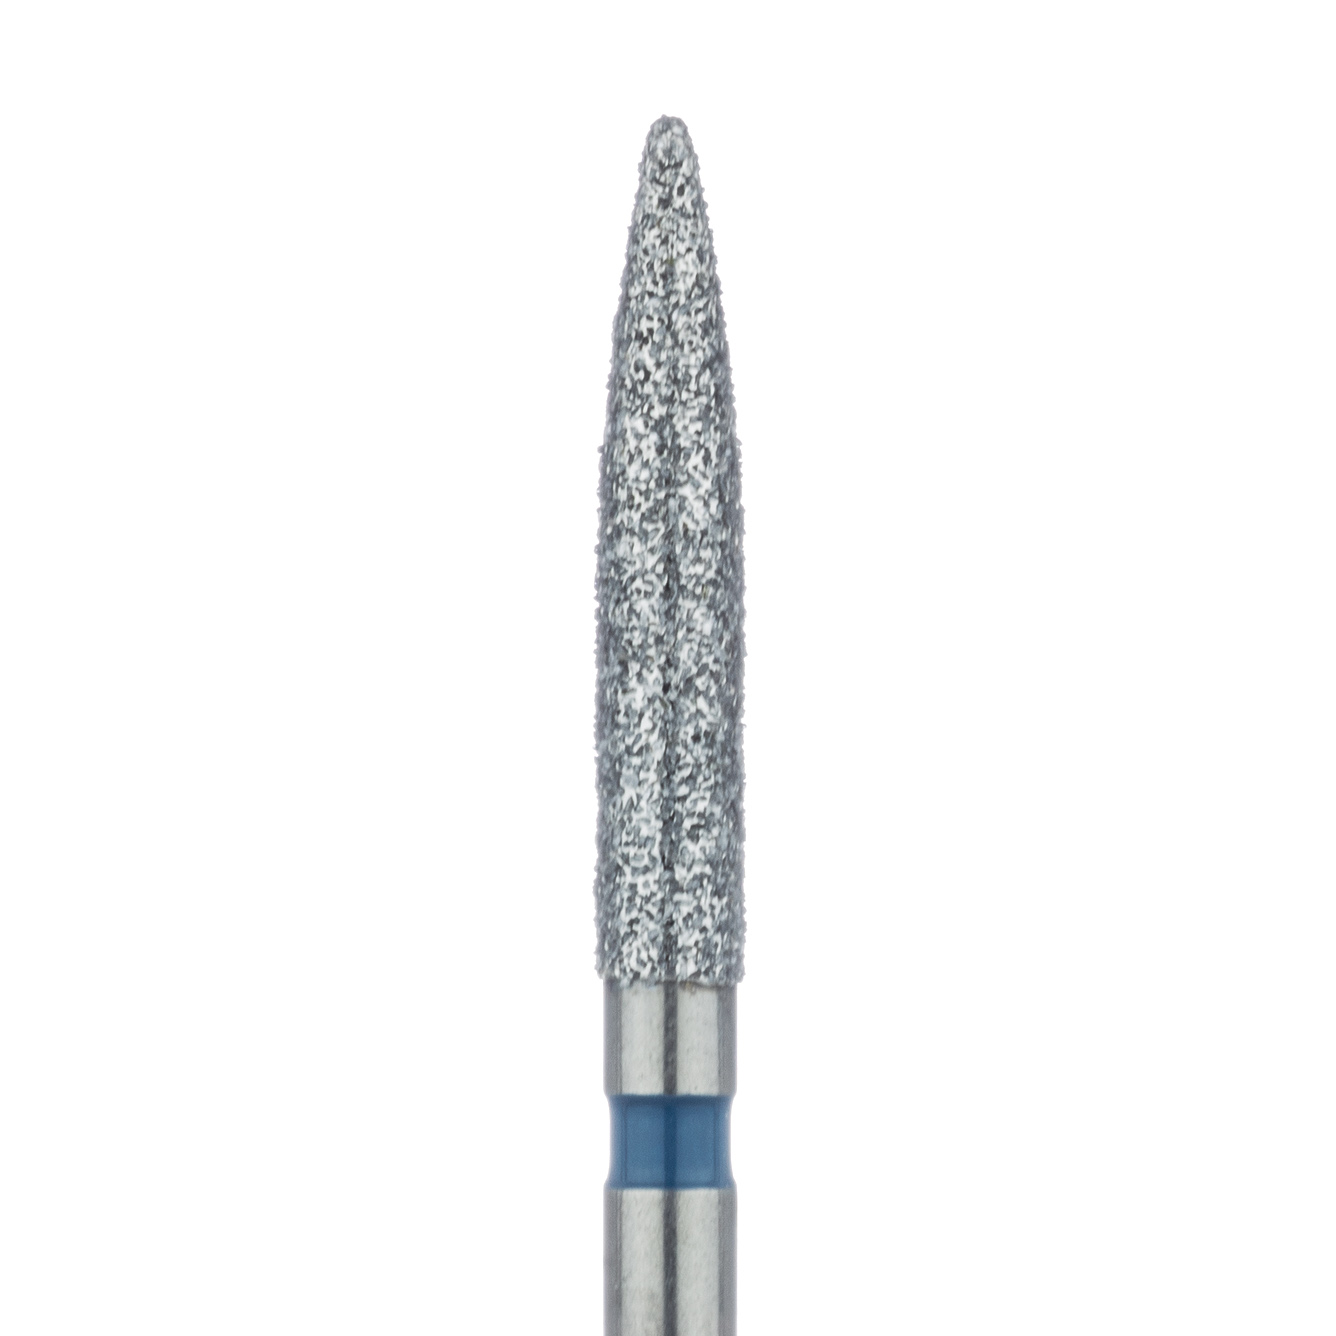 863-018-FG Long Flame Diamond Bur, 1.8mm Ø, Medium, FG